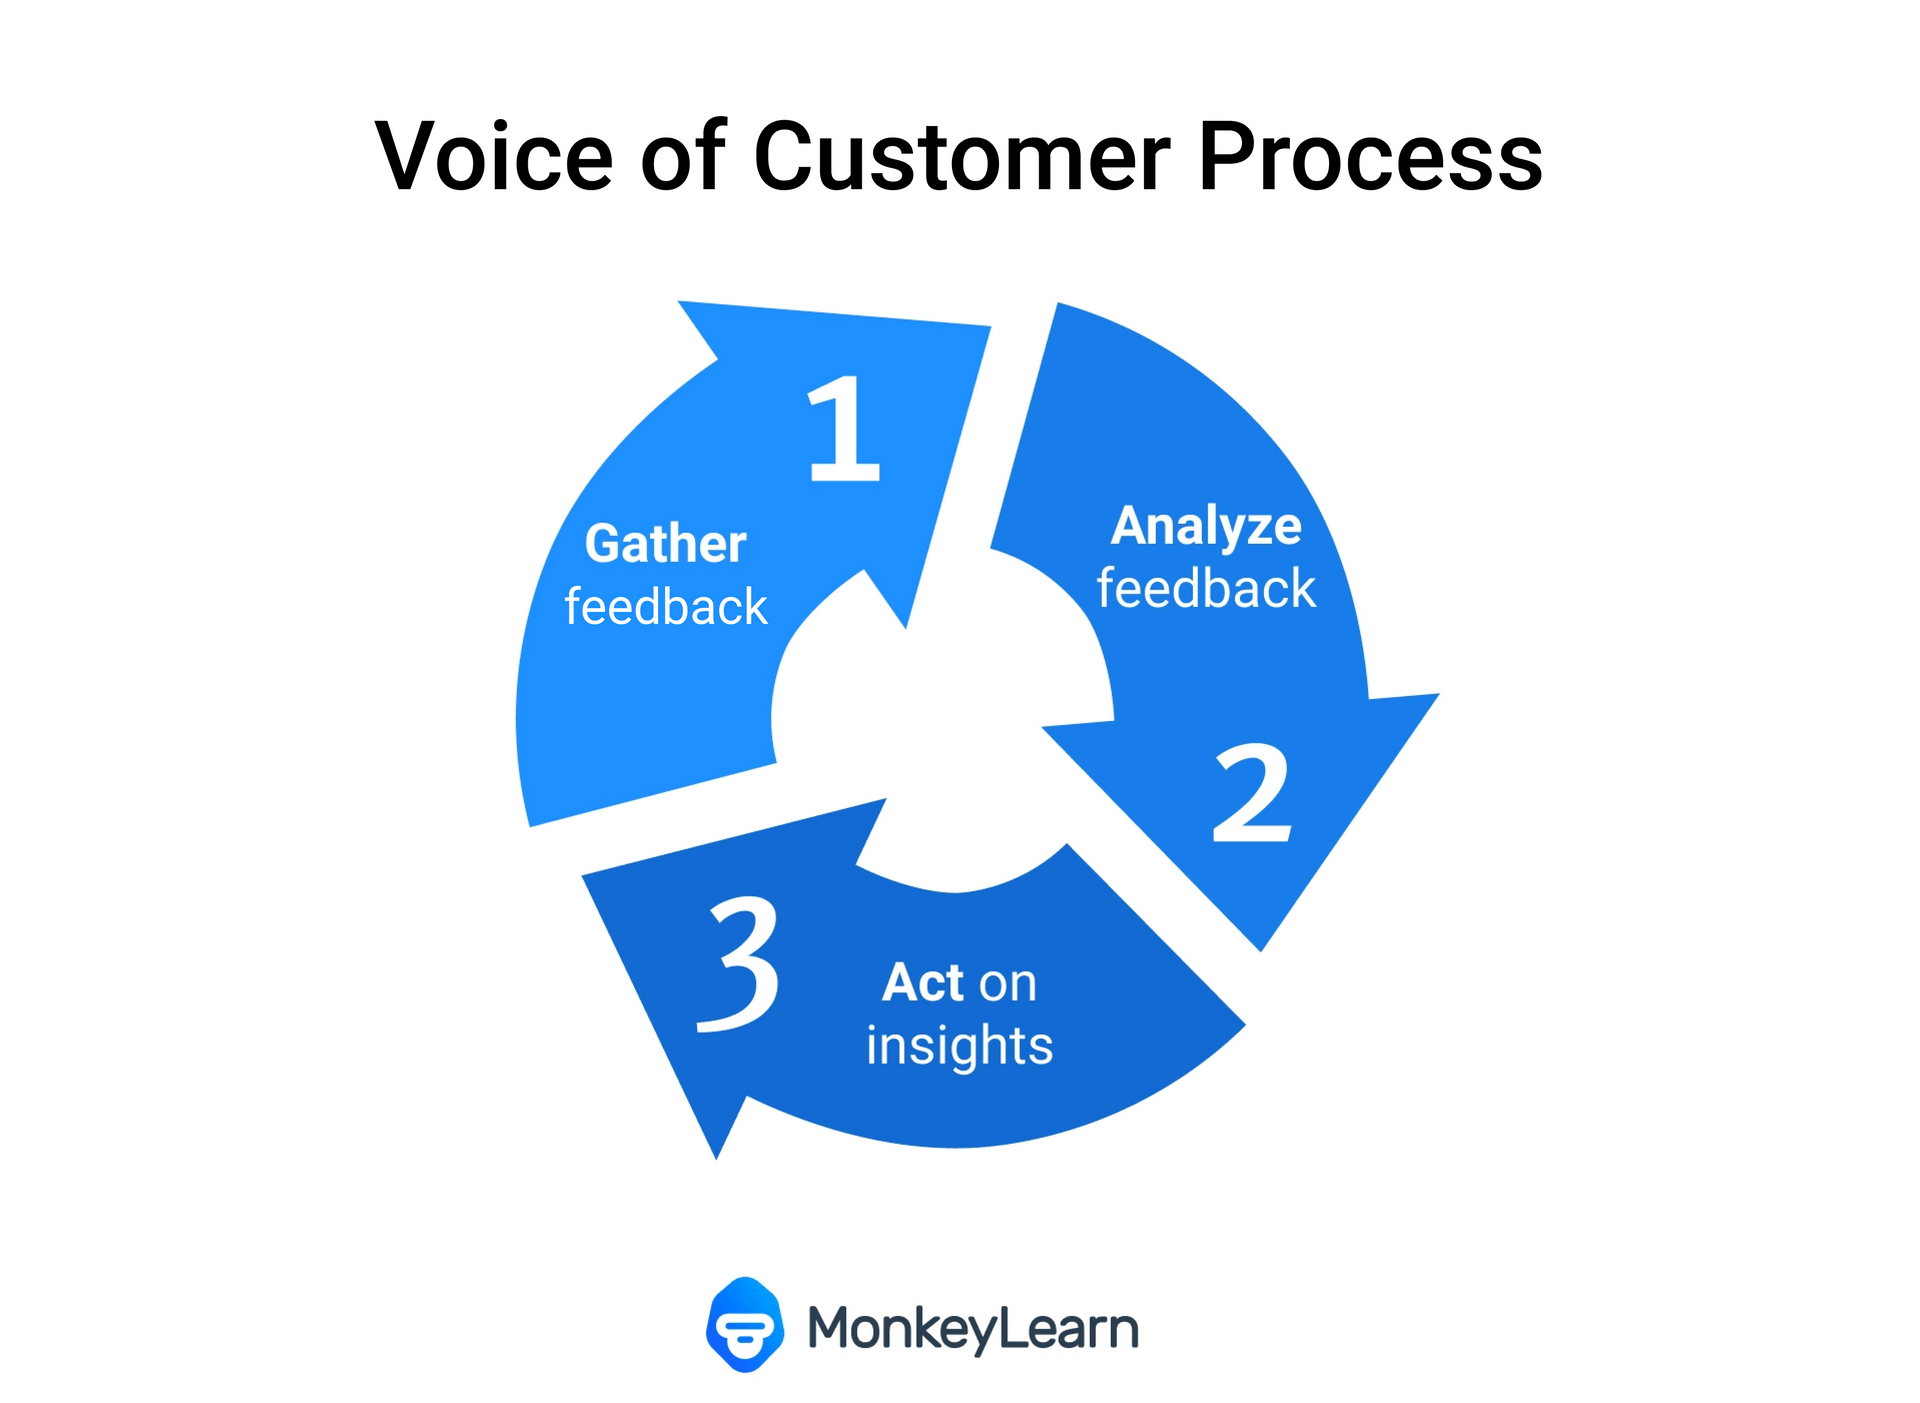 Voice of customer process